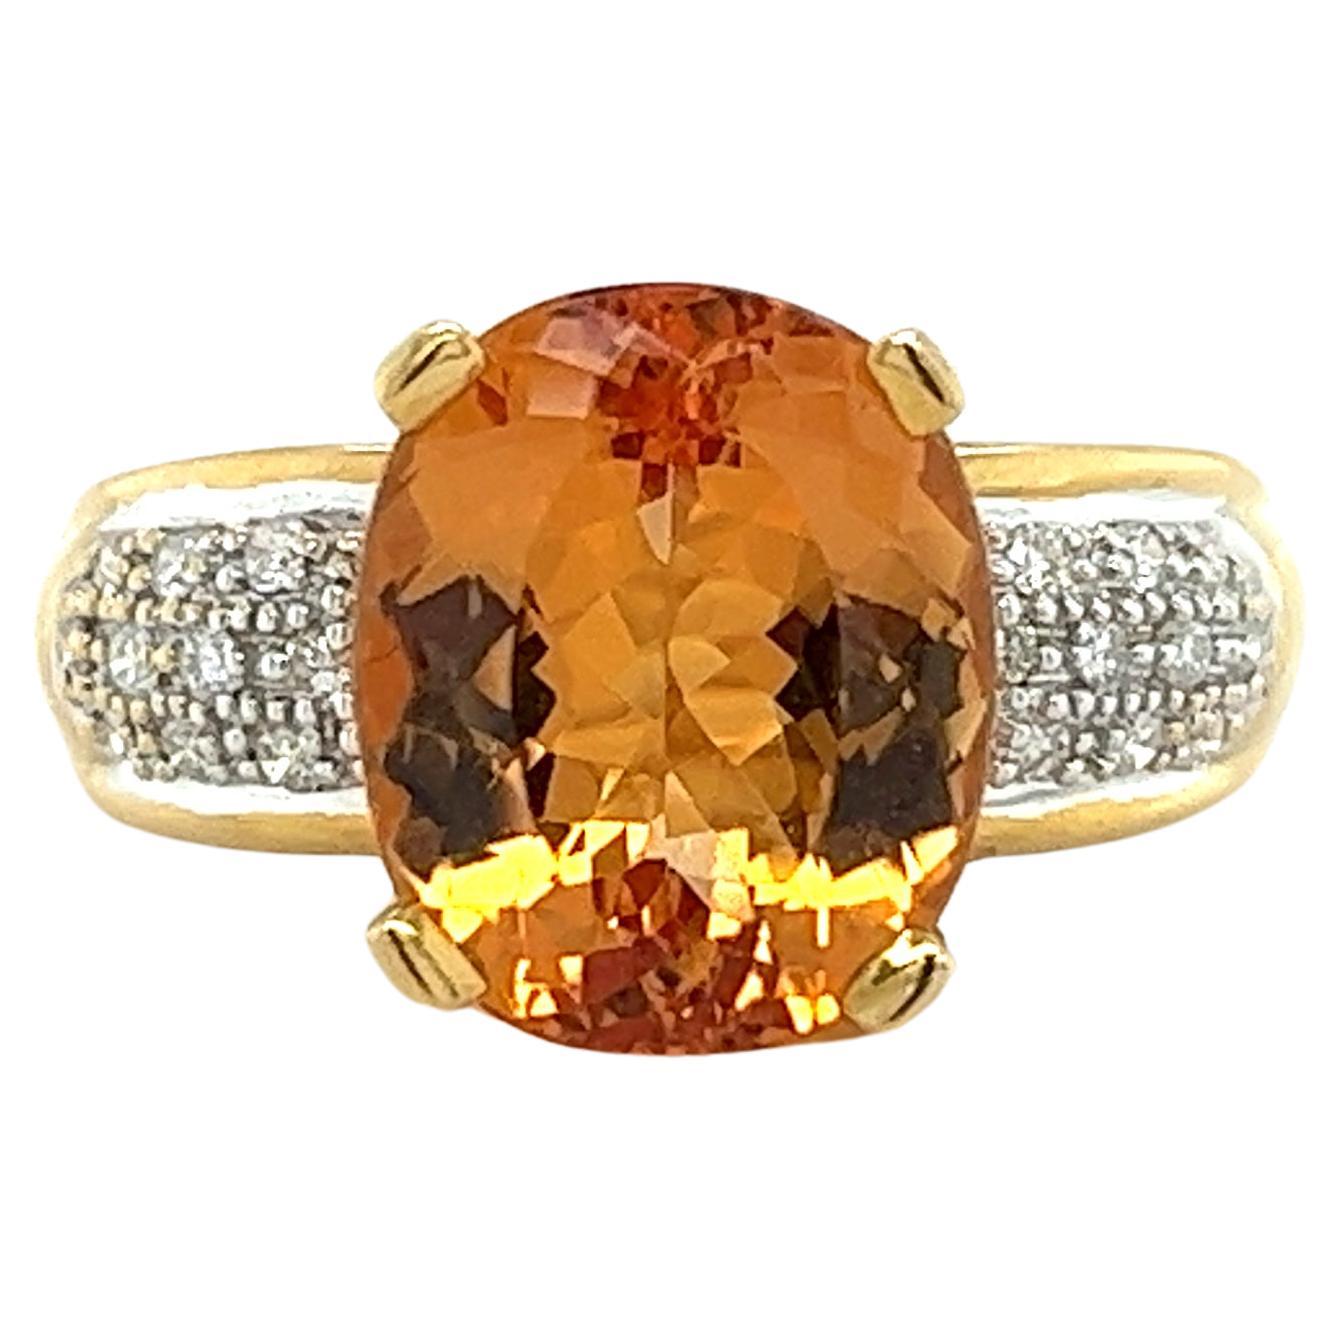 Vintage 6 Carat Oval Cut Orange Topaz & Round Cut Diamond Ring in 18K Solid Gold